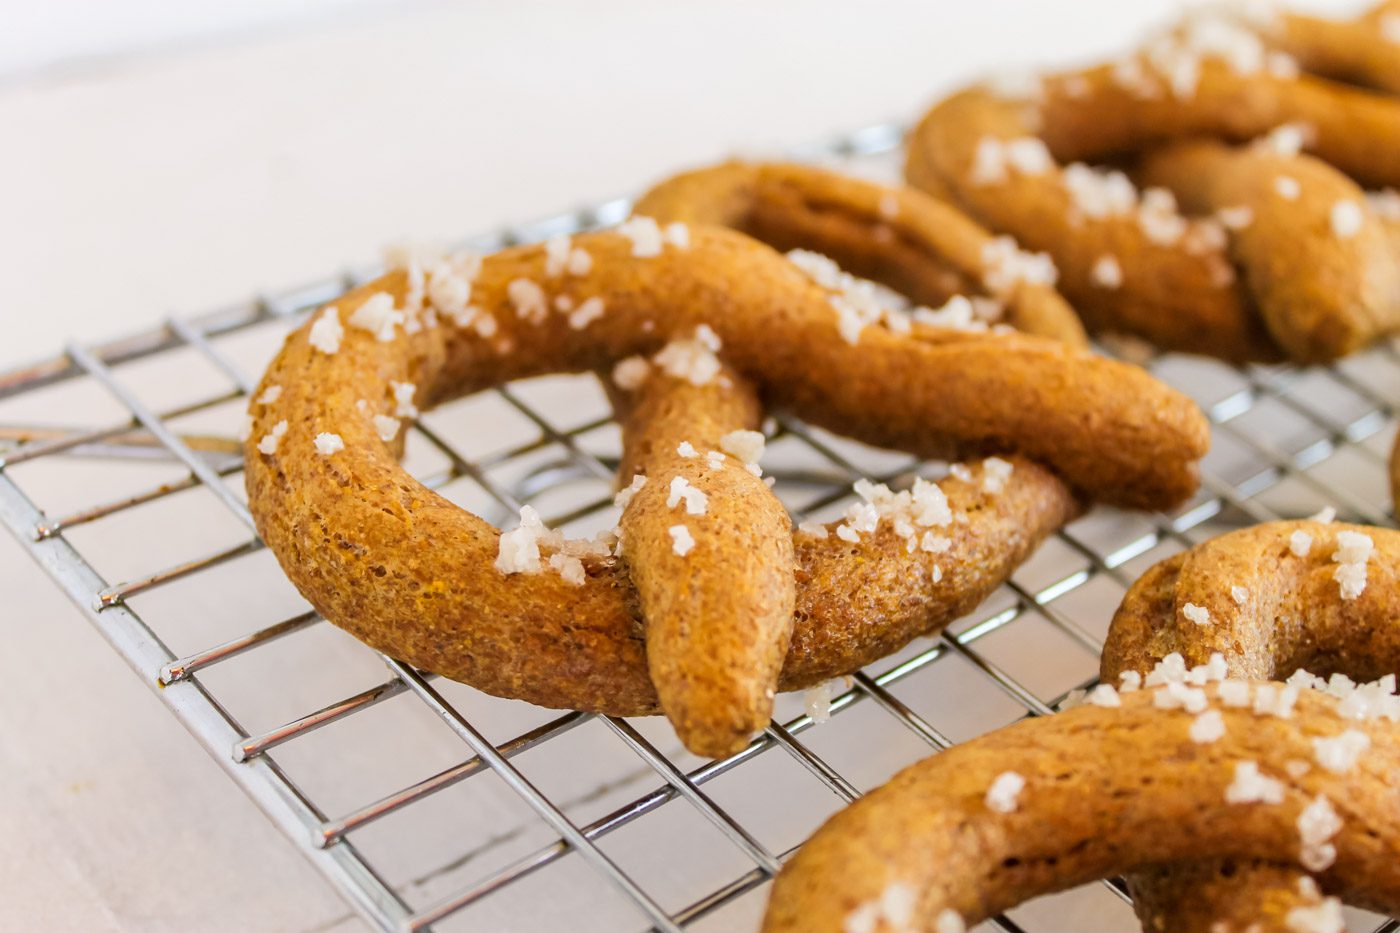 homemade soft pretzels covered in sea salt sitting on a baking rack